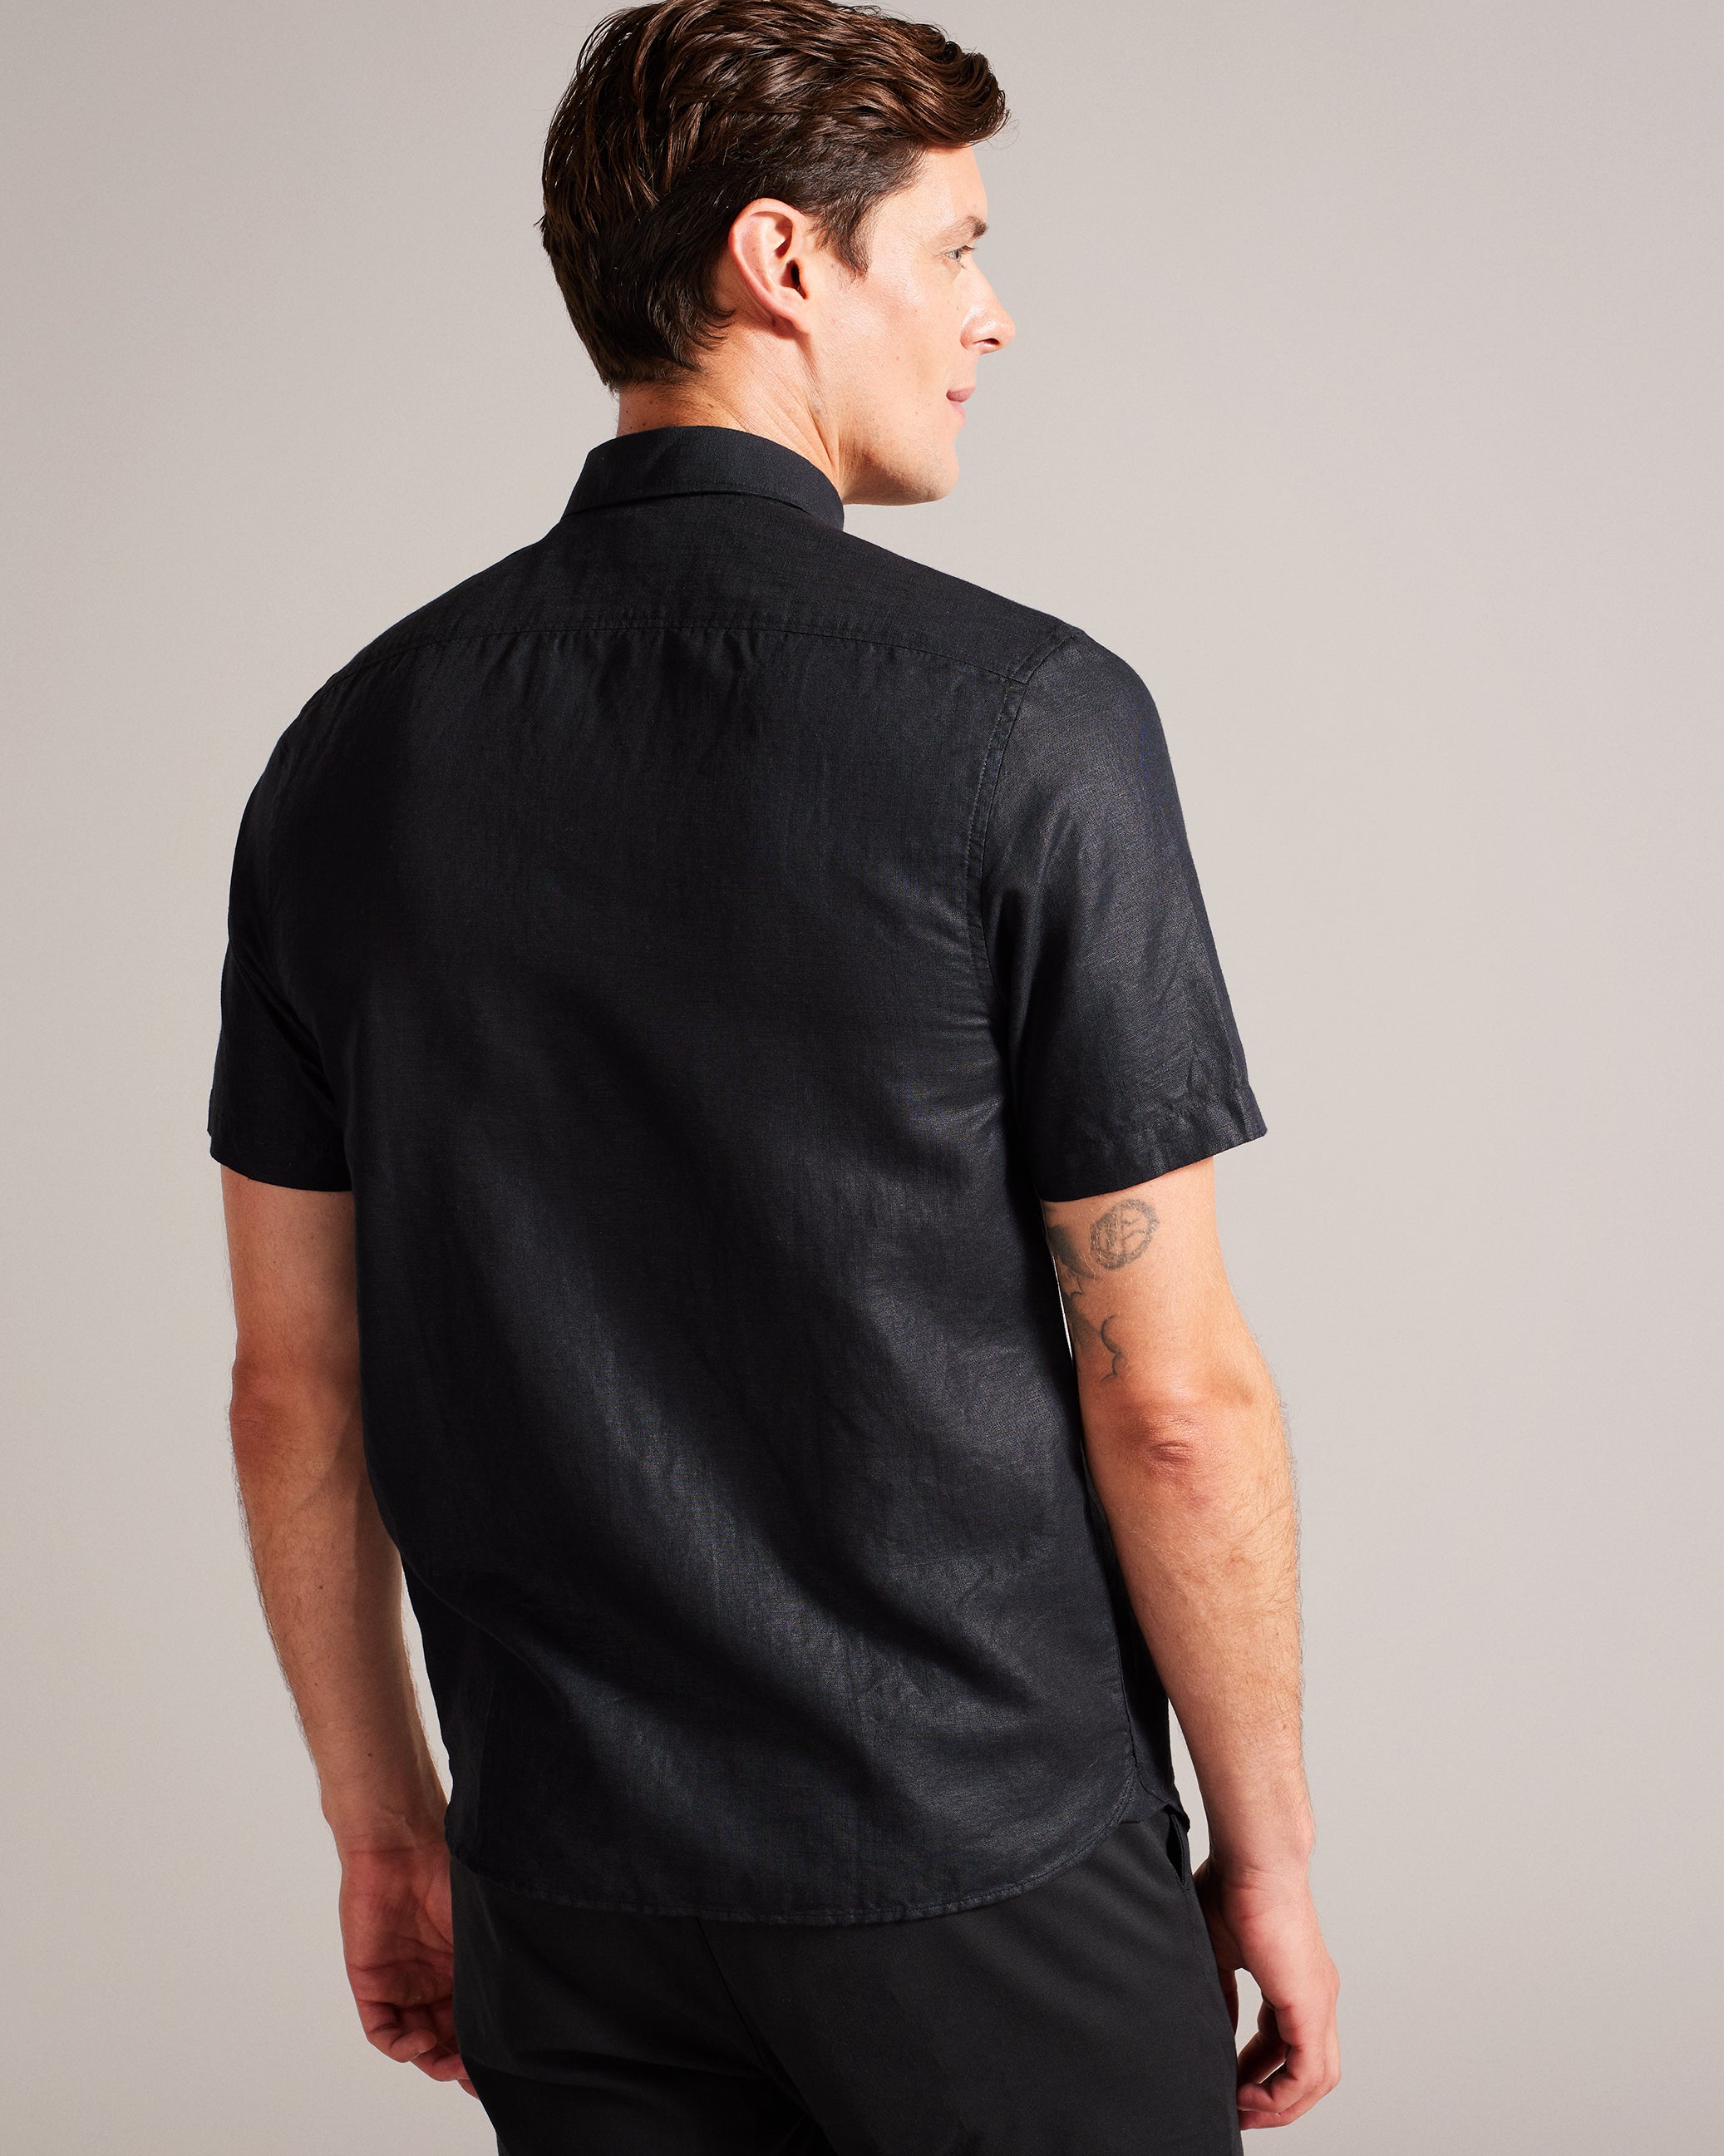 Kingfrd Short Sleeve Linen Shirt Black